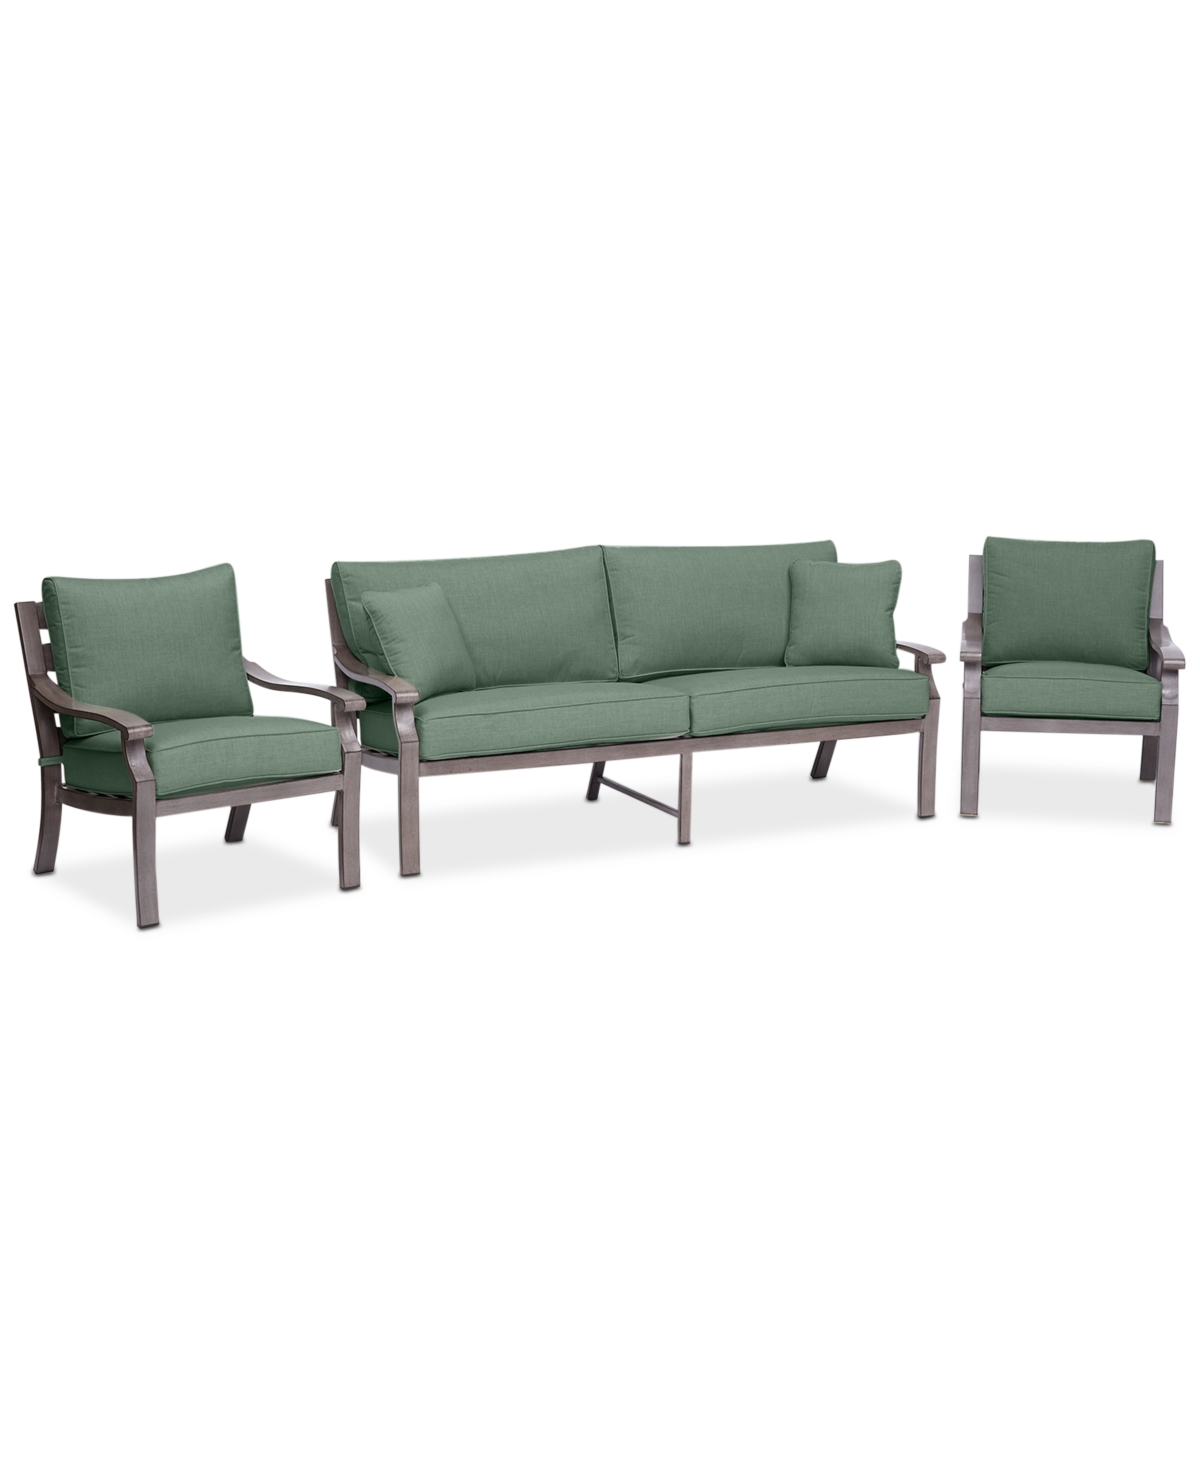 Shop Agio Tara Aluminum Outdoor 3-pc. Seating Set (1 Sofa & 2 Club Chairs), Created For Macy's In Outdura Grasshopper